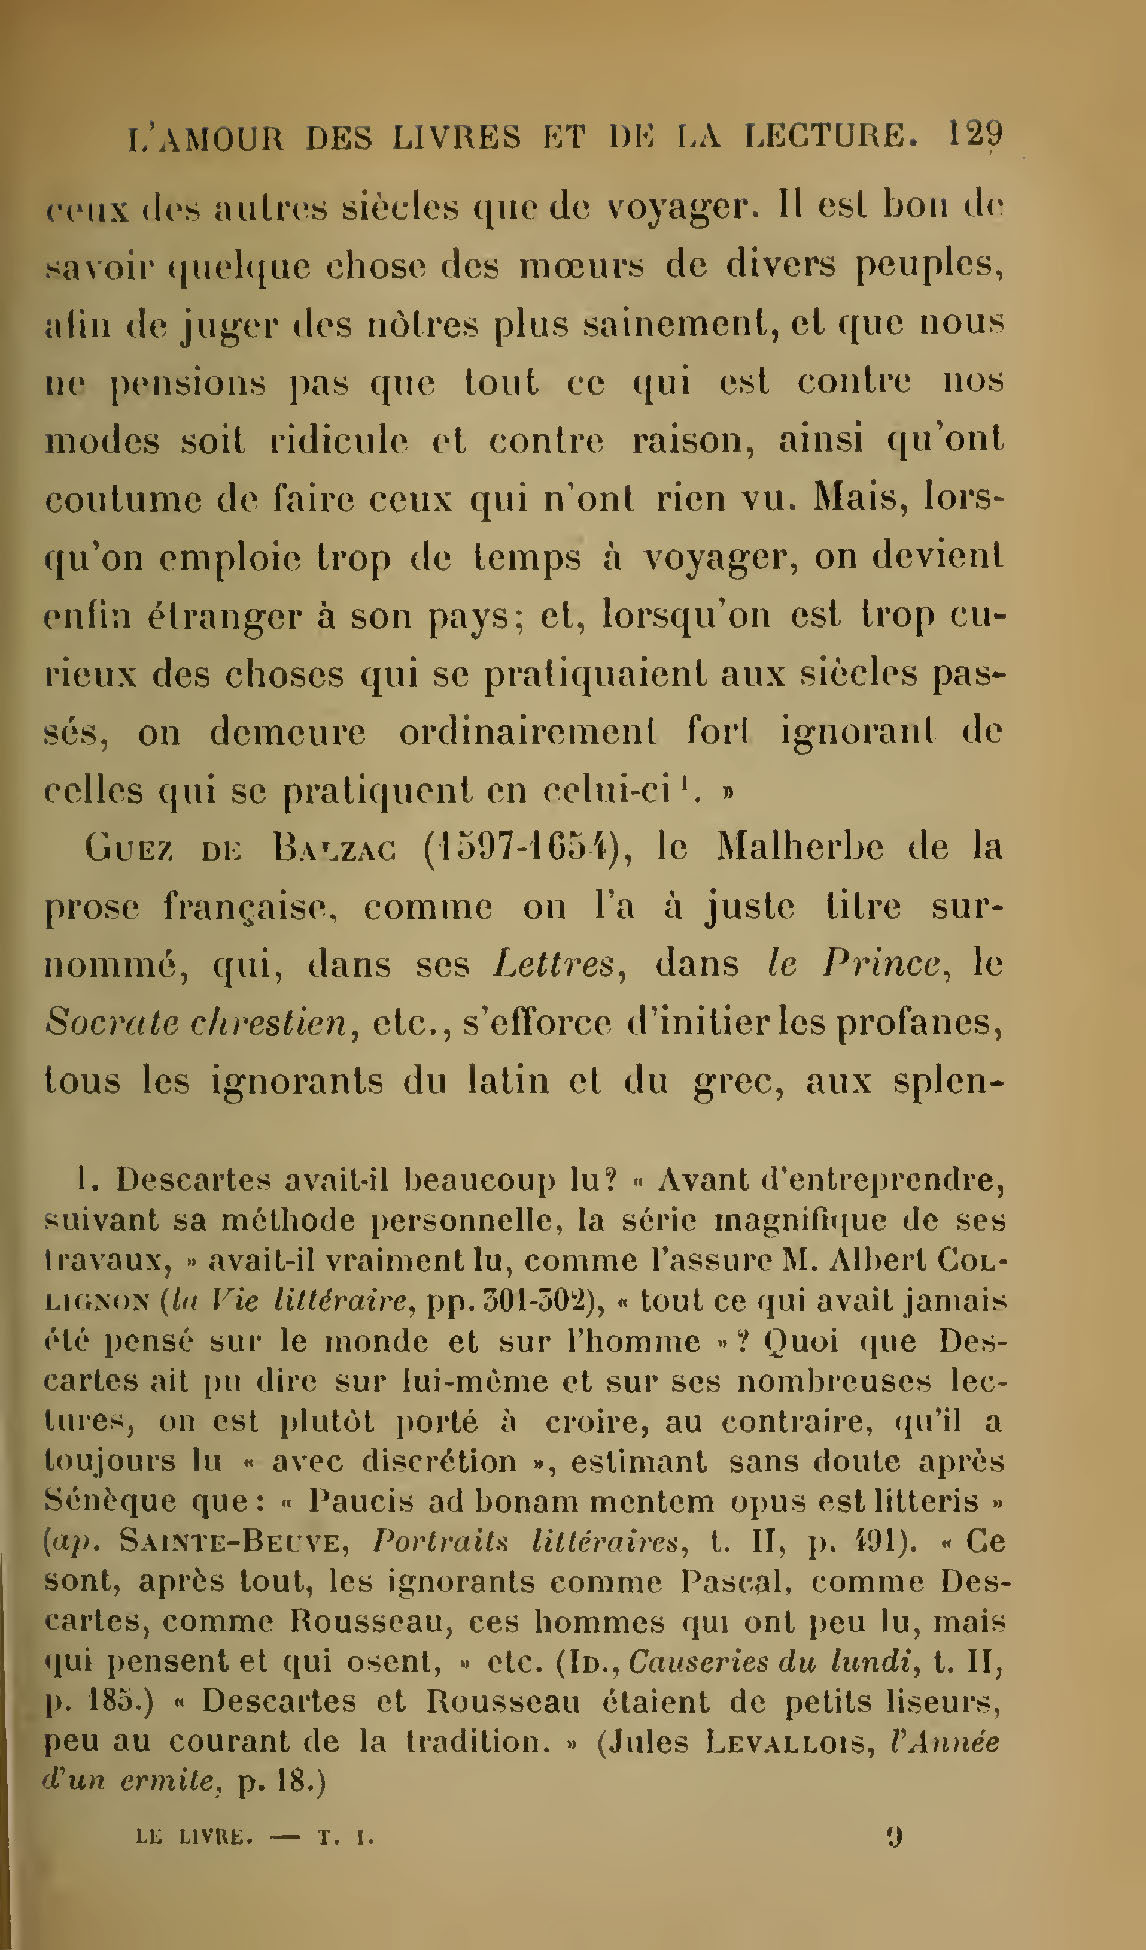 Albert Cim, Le Livre, t. I, p. 129.